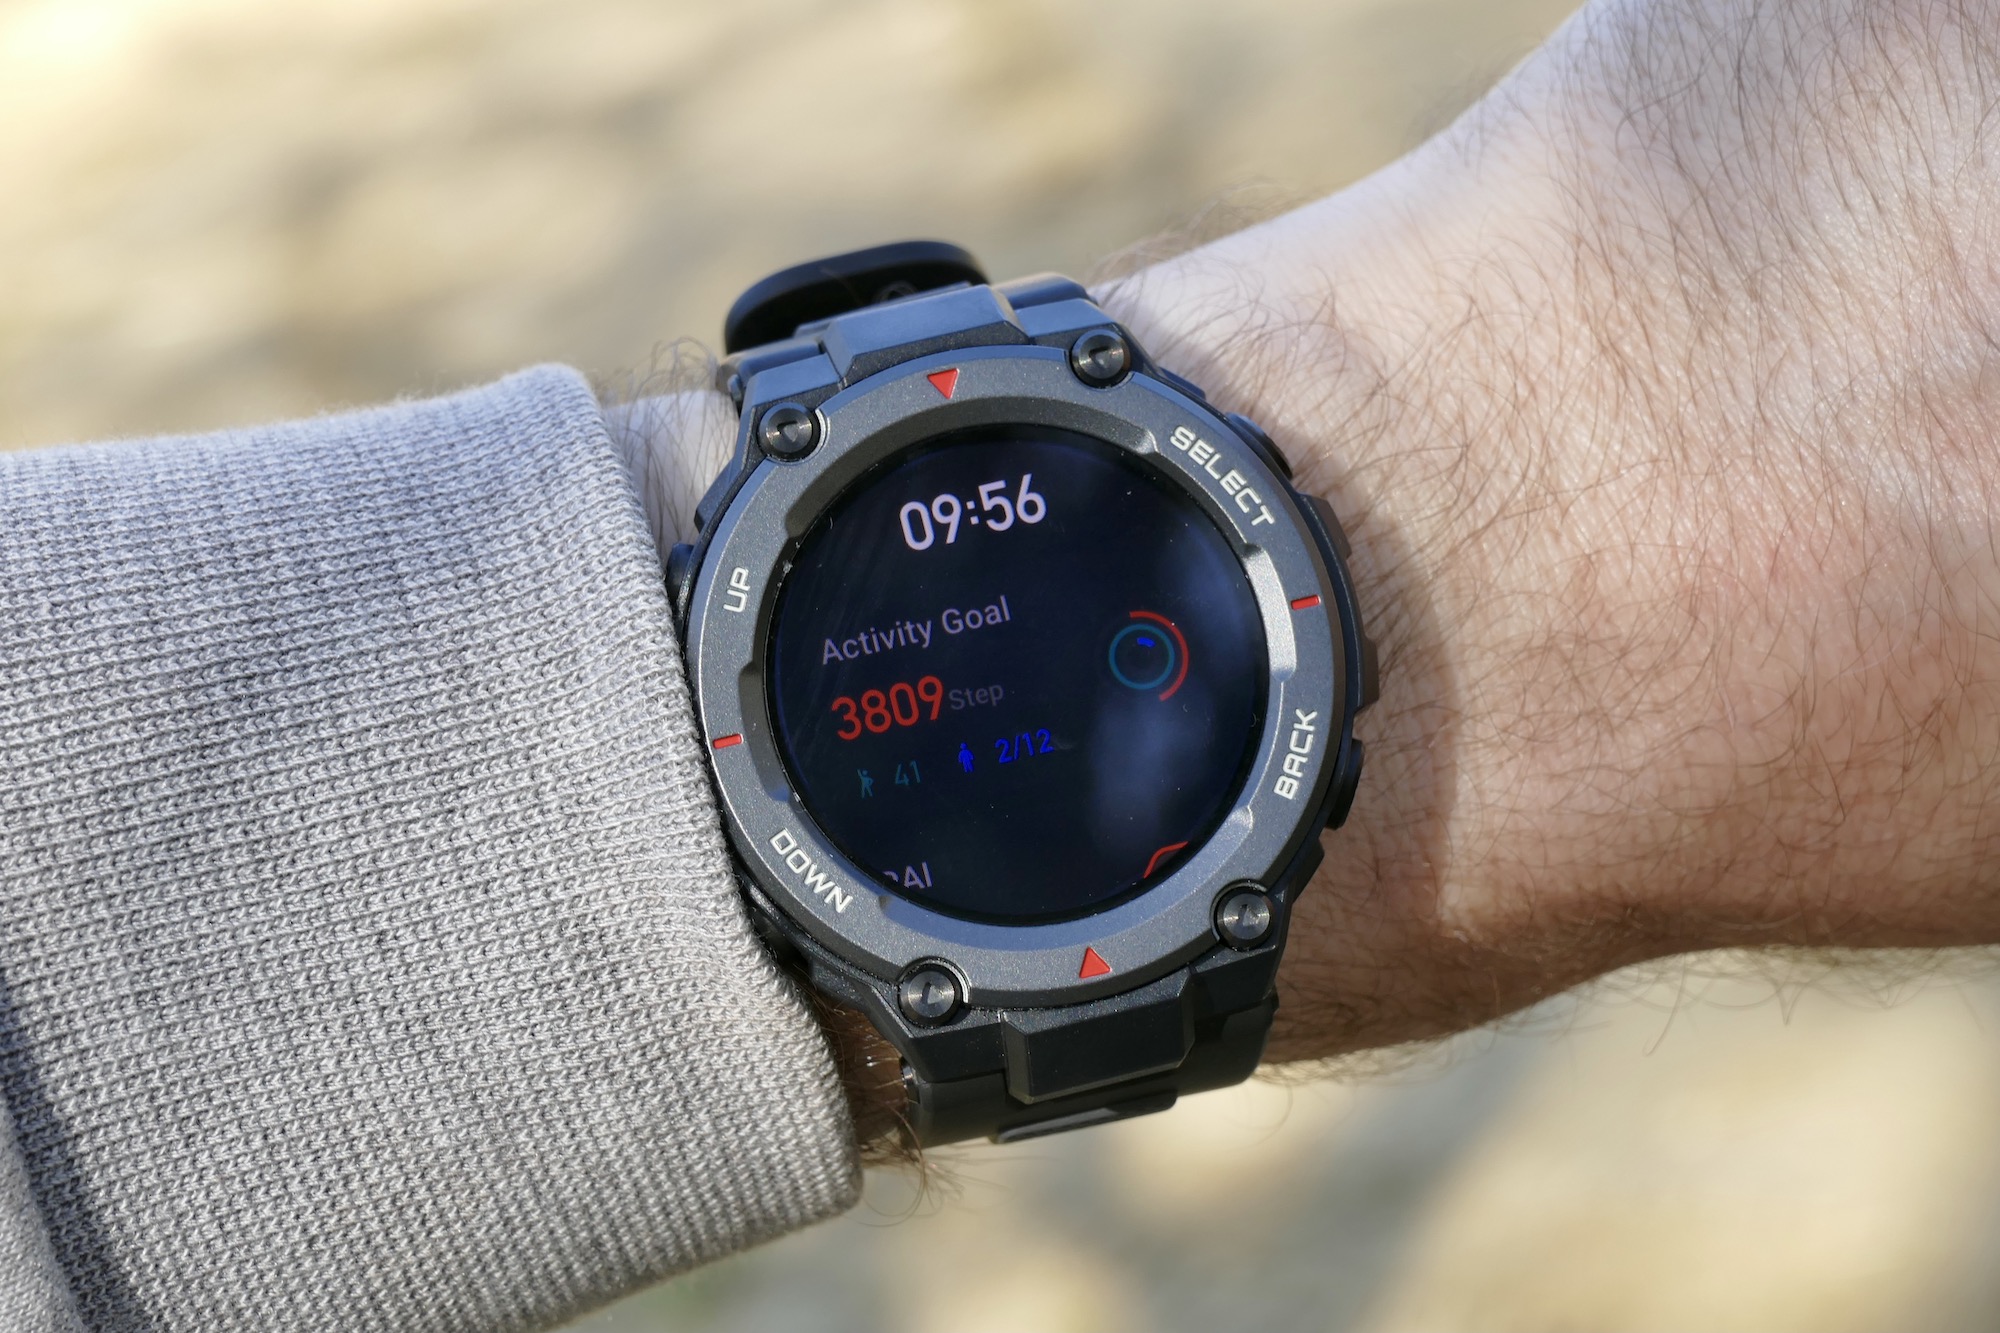 Amazfit T-Rex Pro Smartwatch sports mode